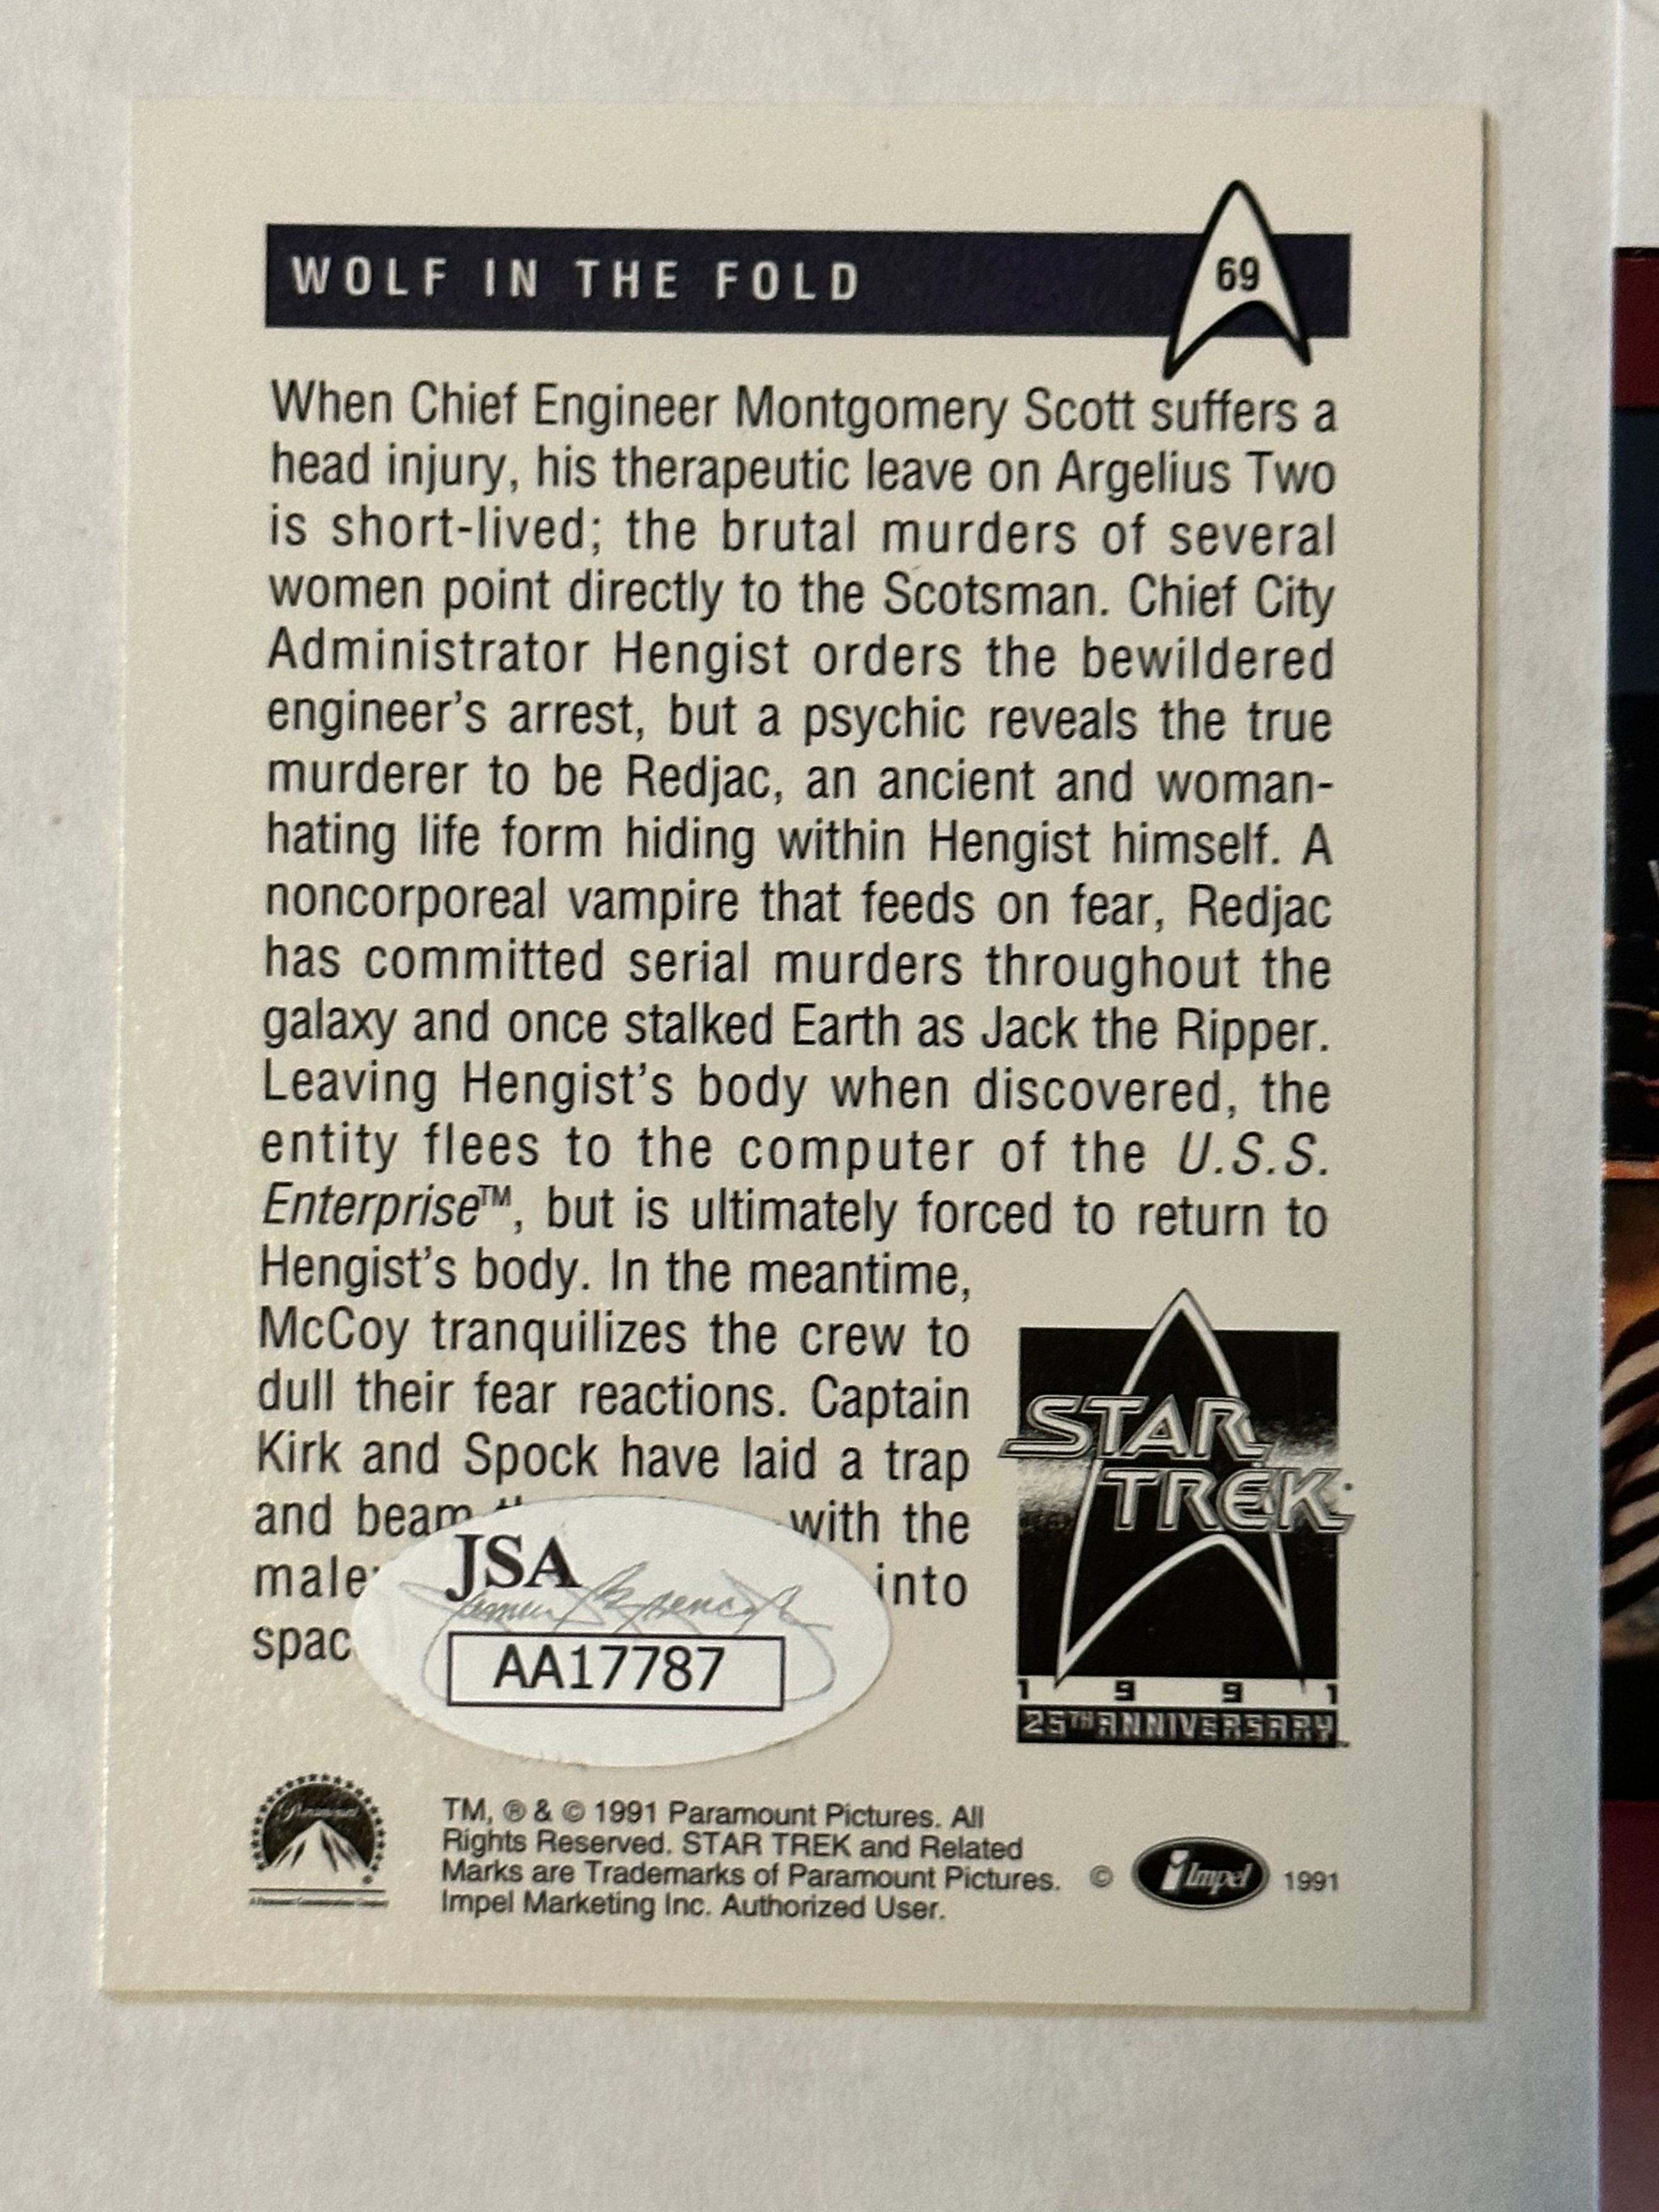 Star Trek Scotty James Doohan autographed card certified by JSA